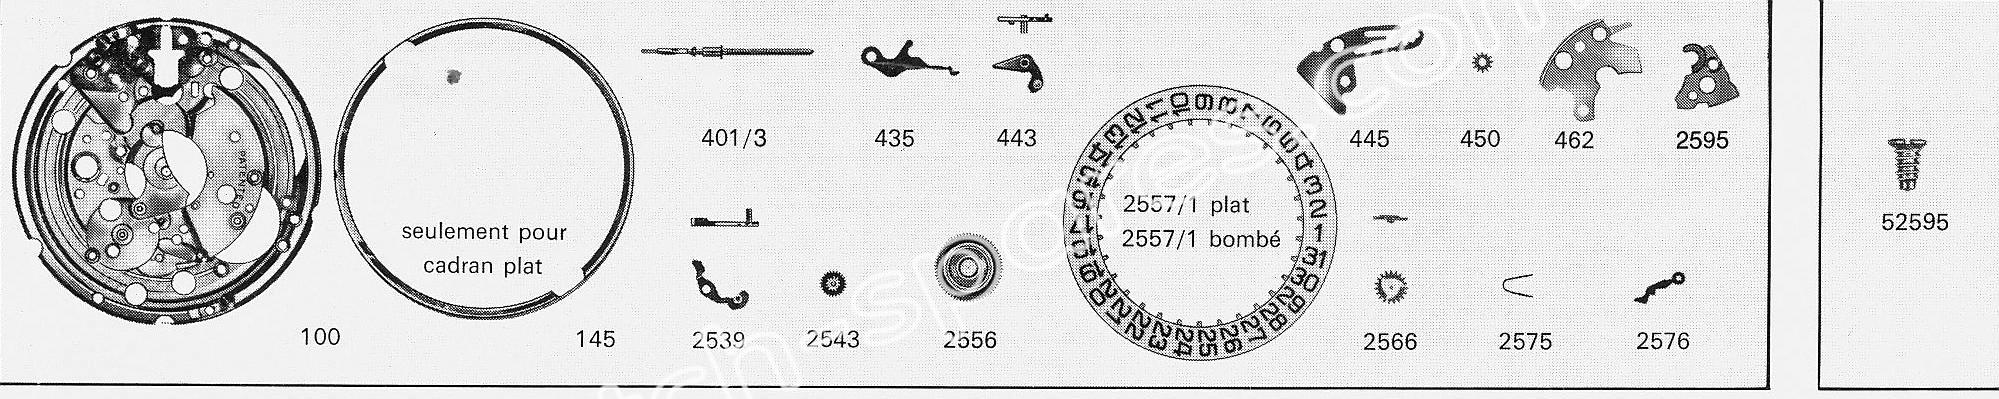 ETA 2826 watch date spare parts